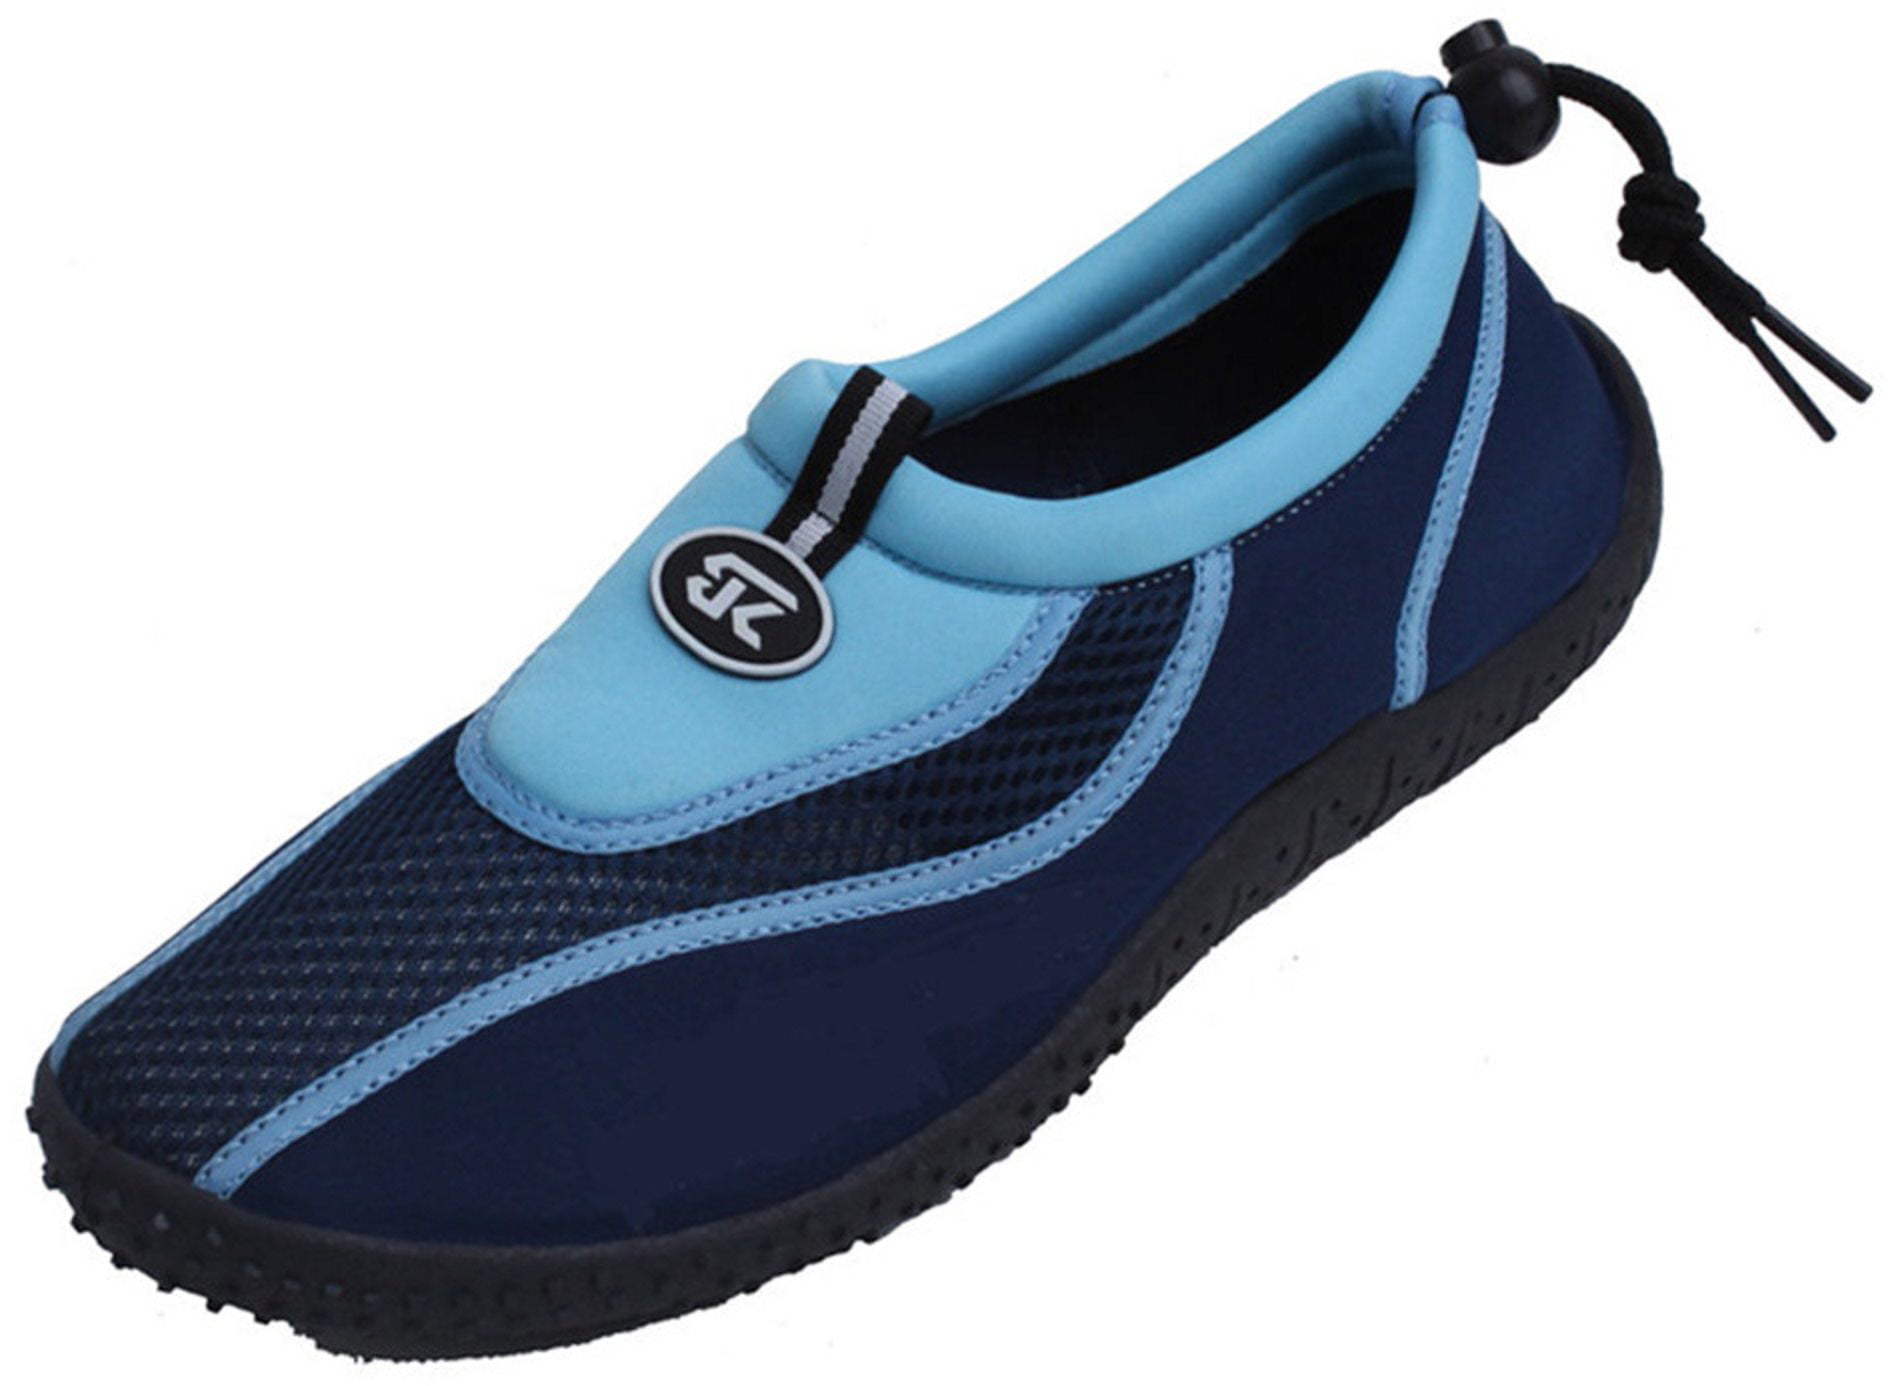 New Mens Athletic Water Shoes Pool Beach Aqua Socks Shoes (5907-Blue-9 ...